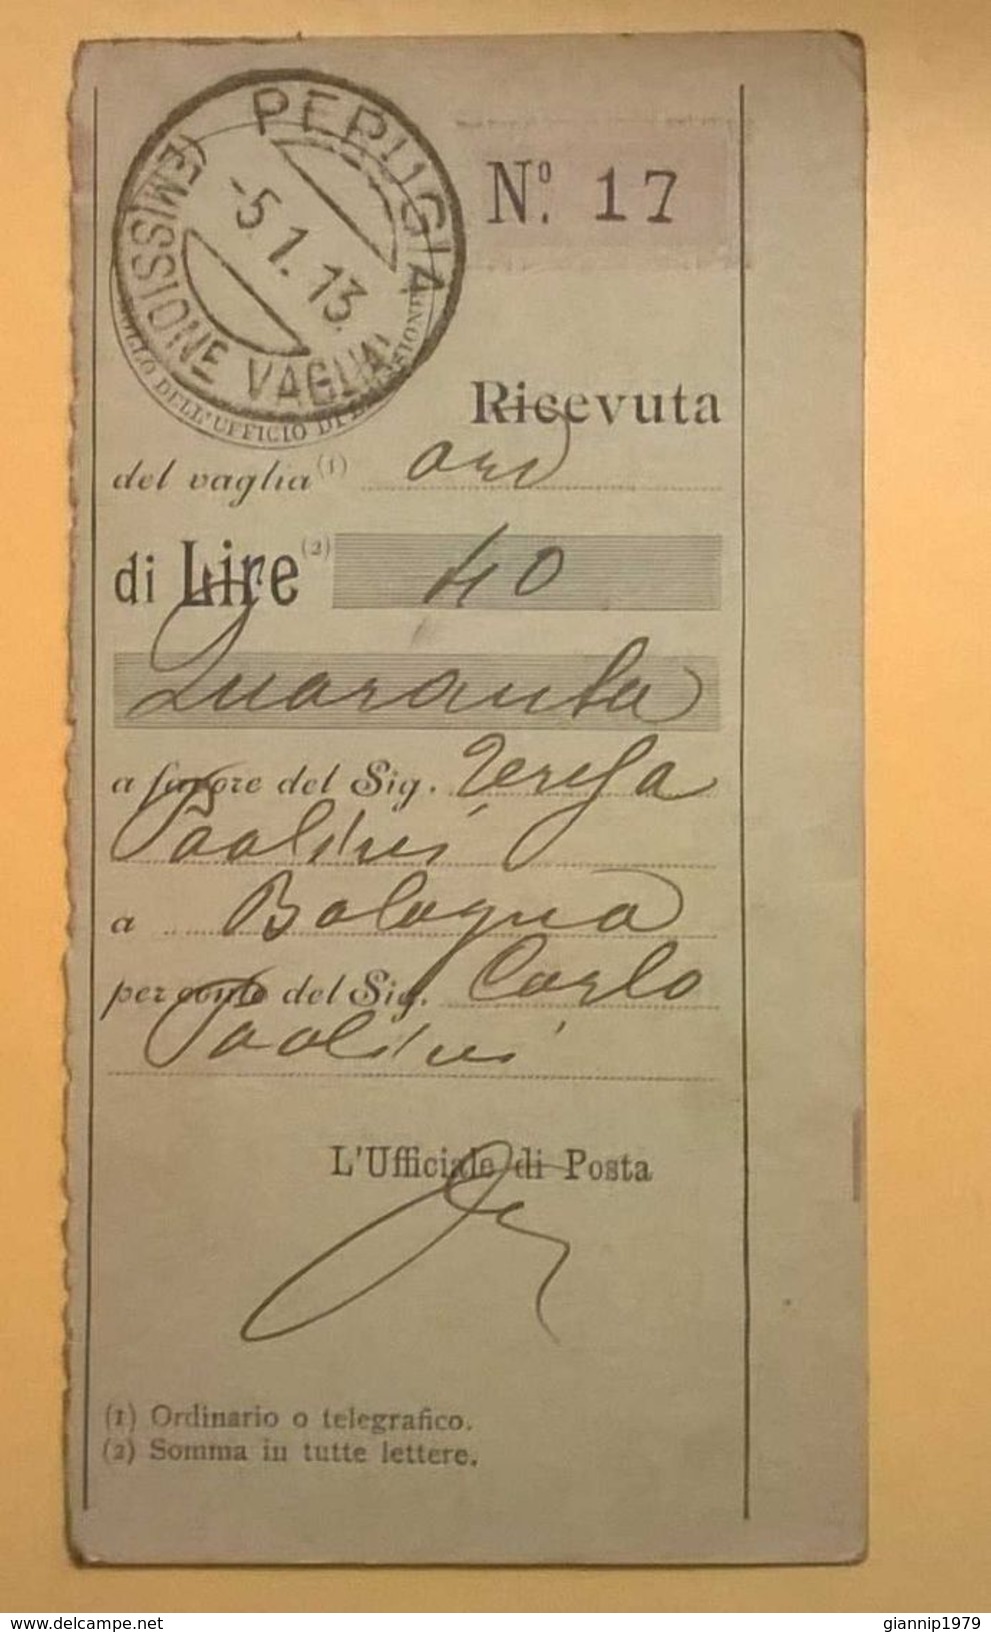 VAGLIA POSTALE RICEVUTA PERUGIA 1913 - Mandatsgebühr